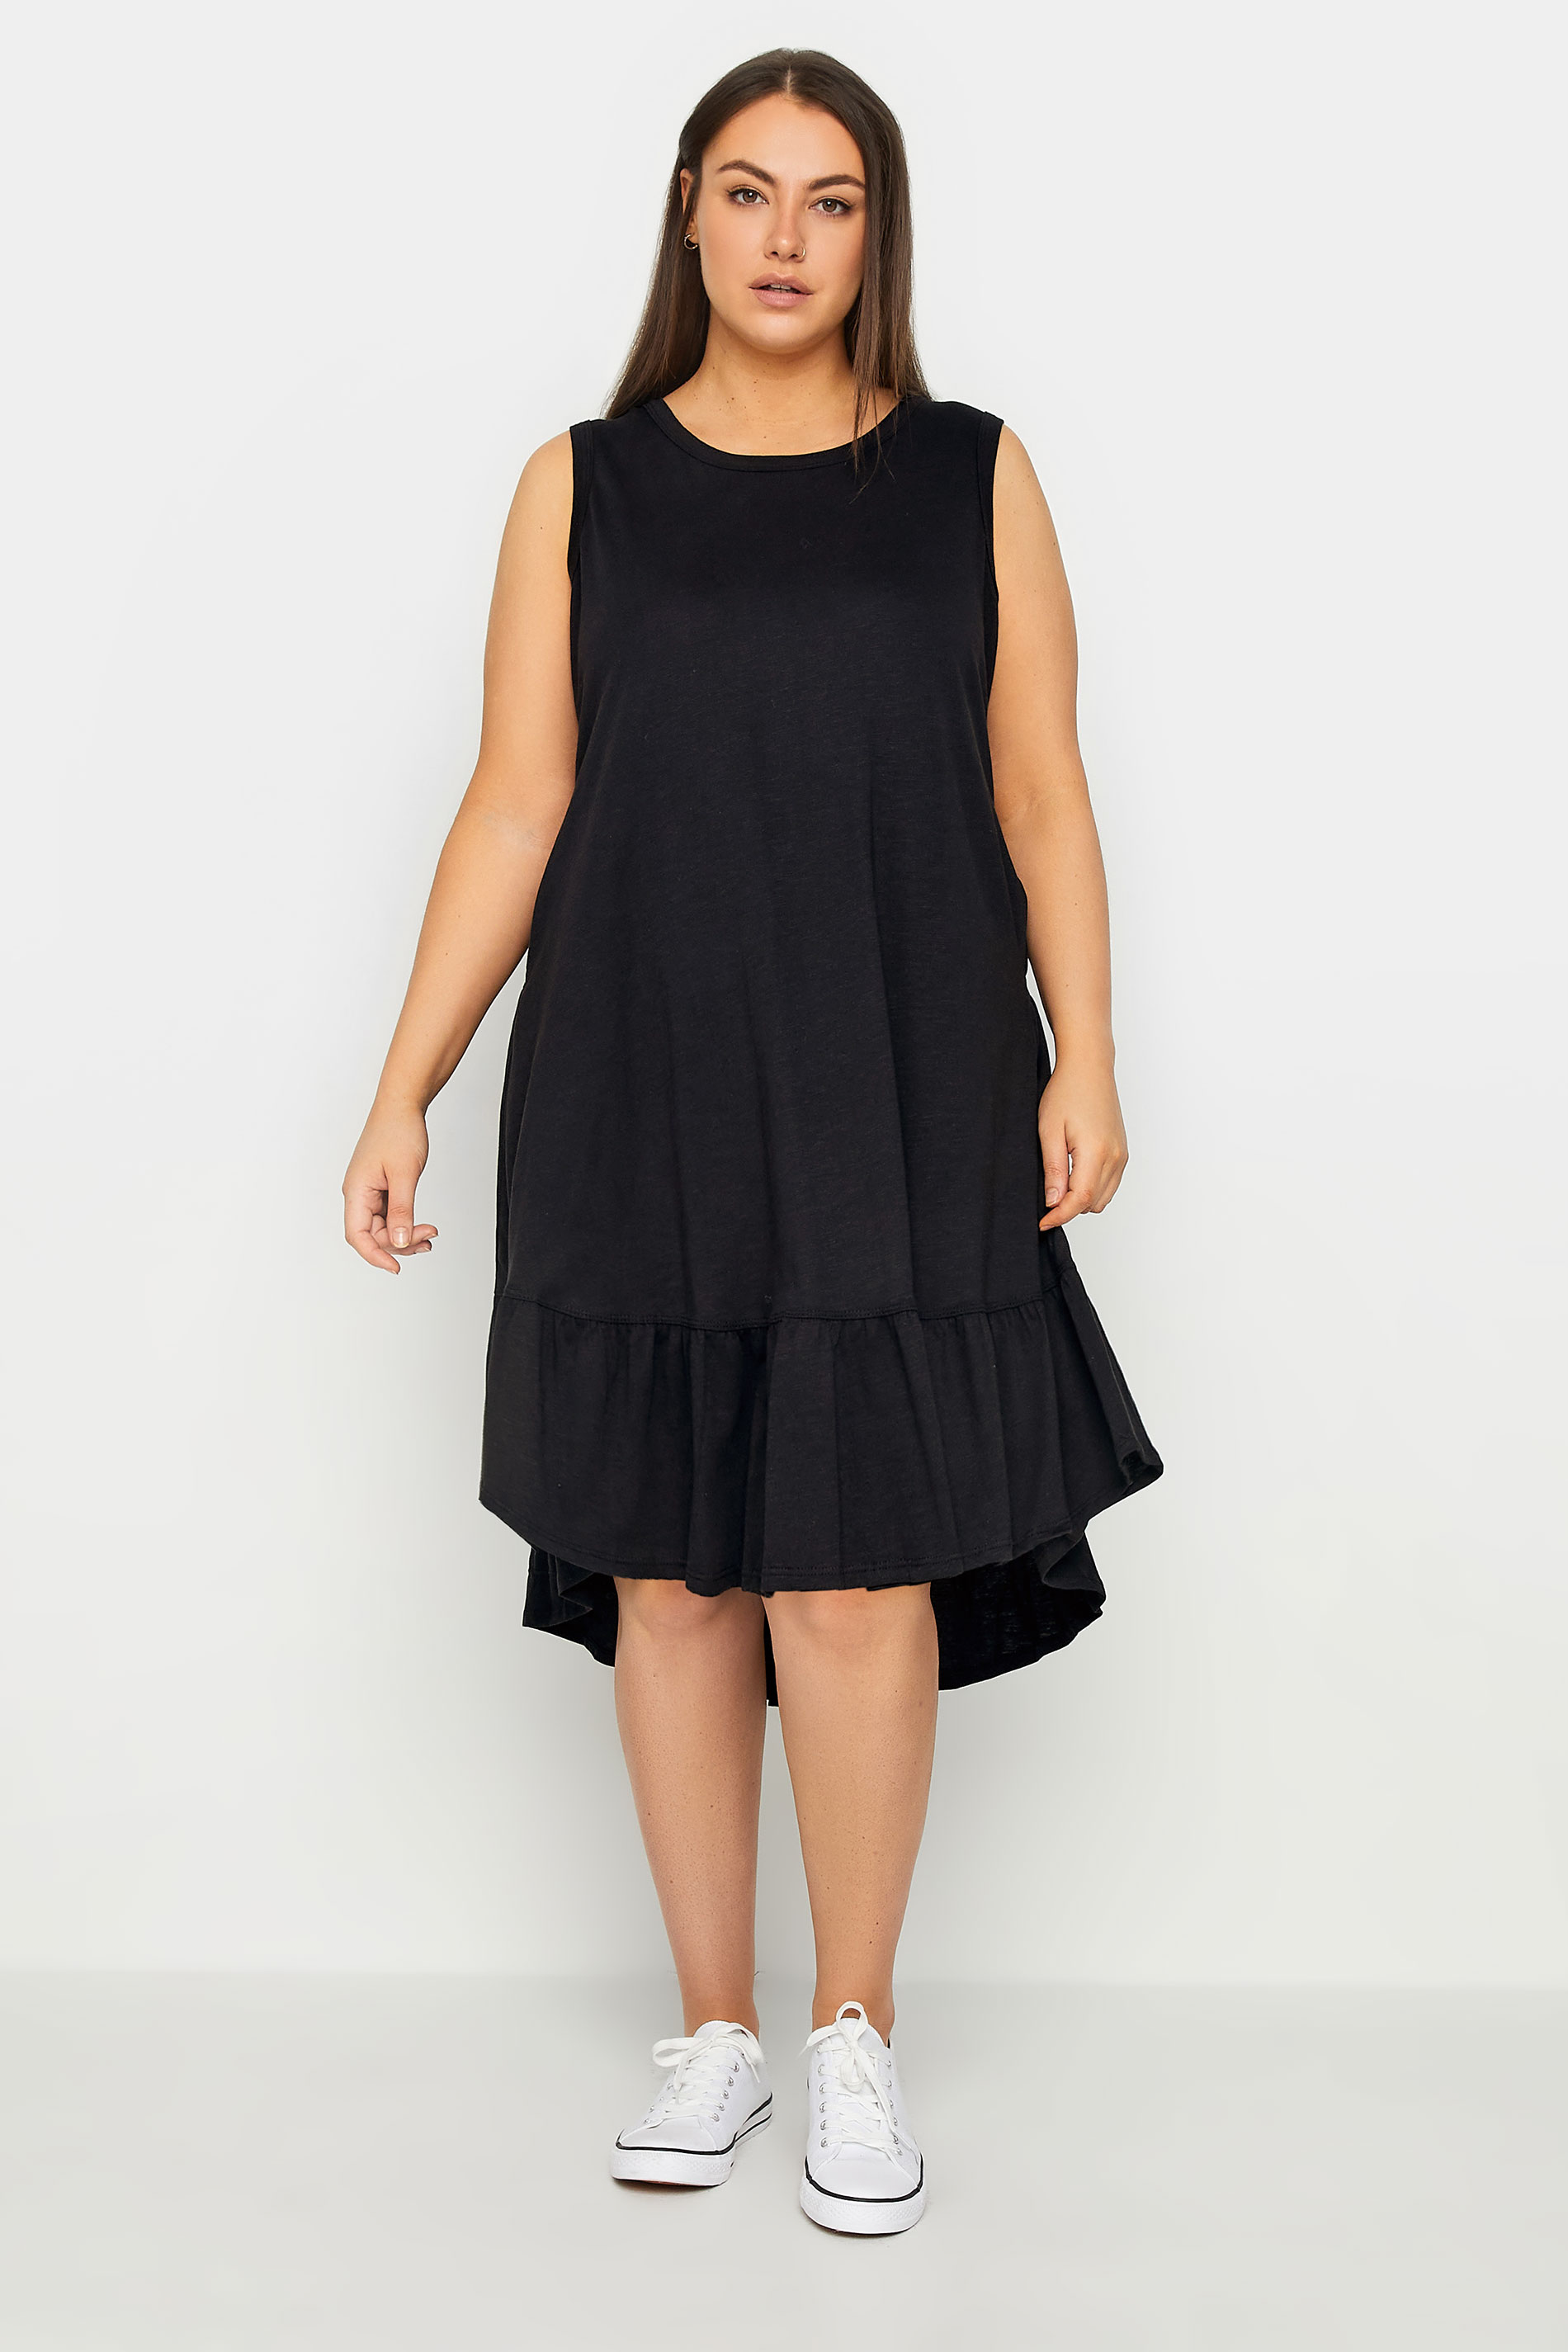 Evie Ruffle Sleeveless Black Plain Dress 1